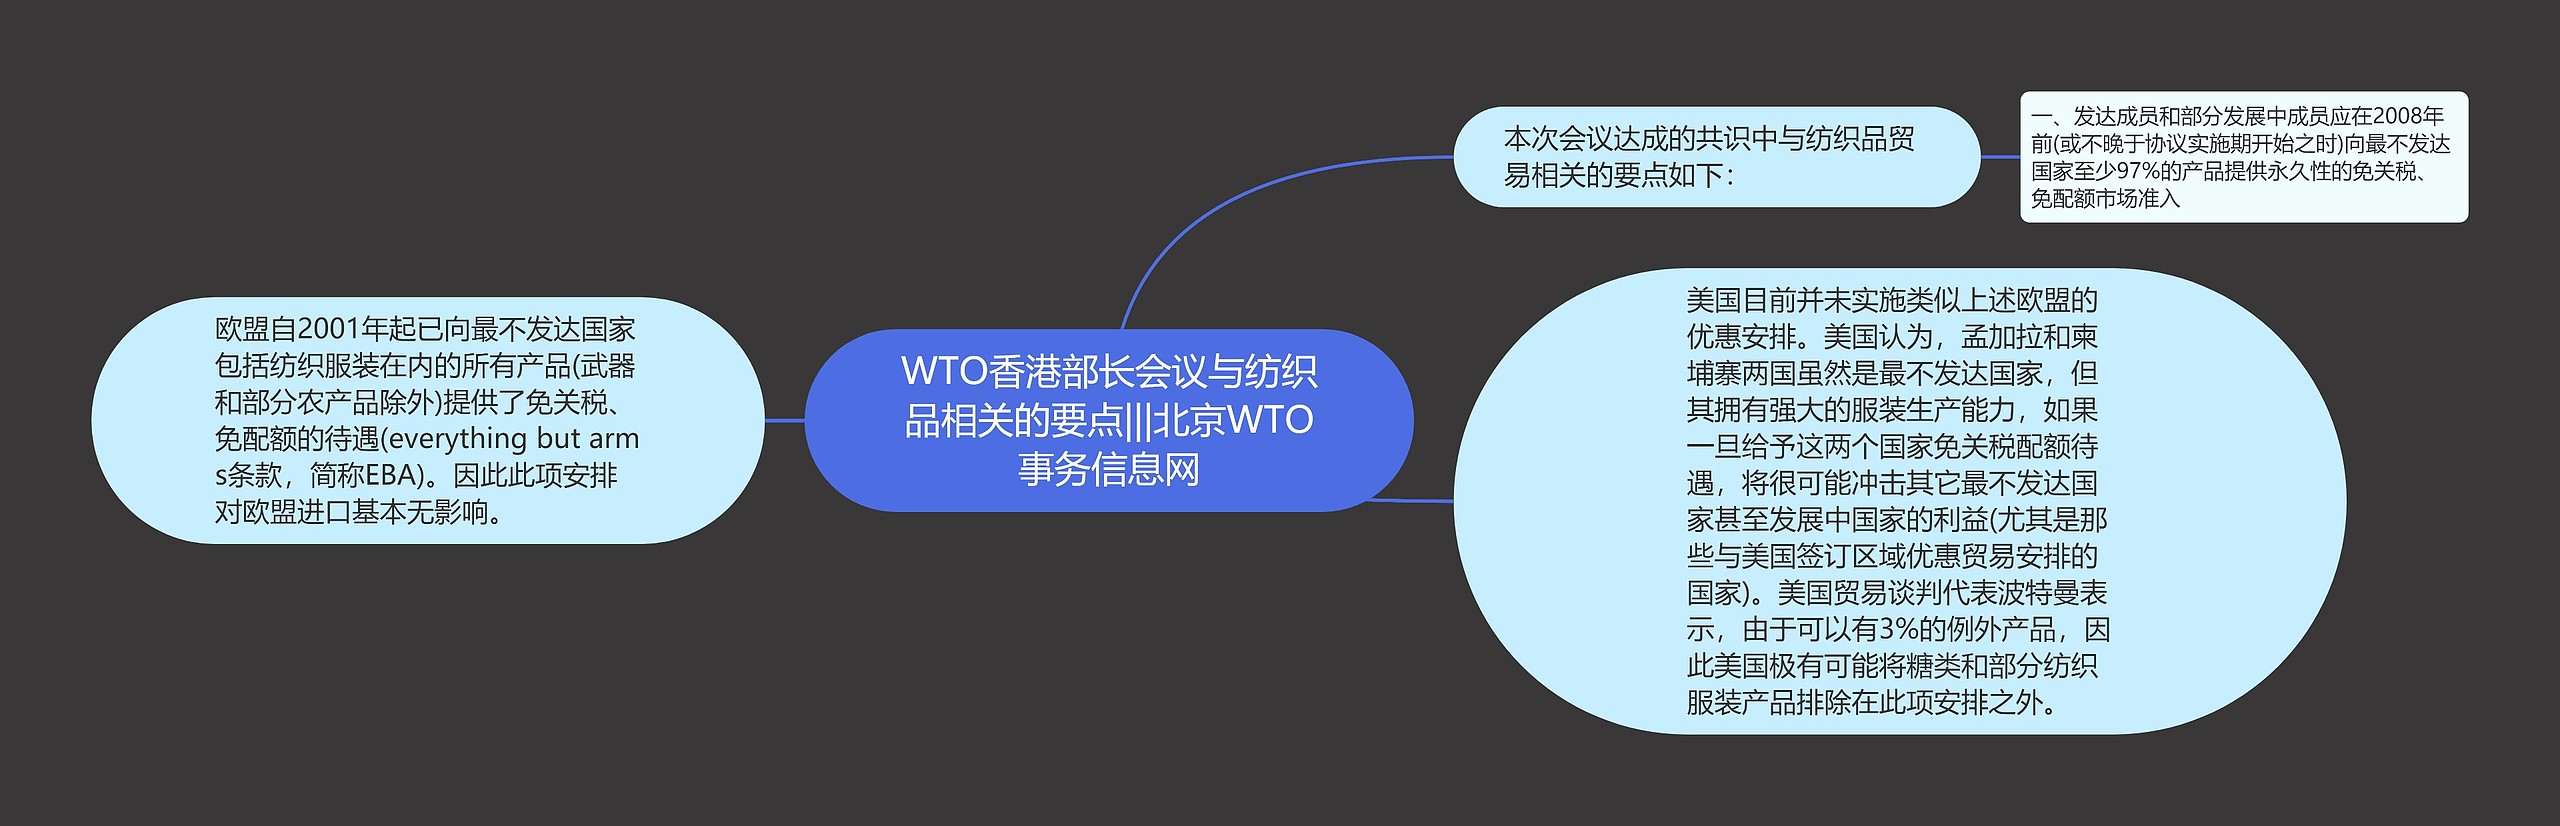 WTO香港部长会议与纺织品相关的要点|||北京WTO事务信息网